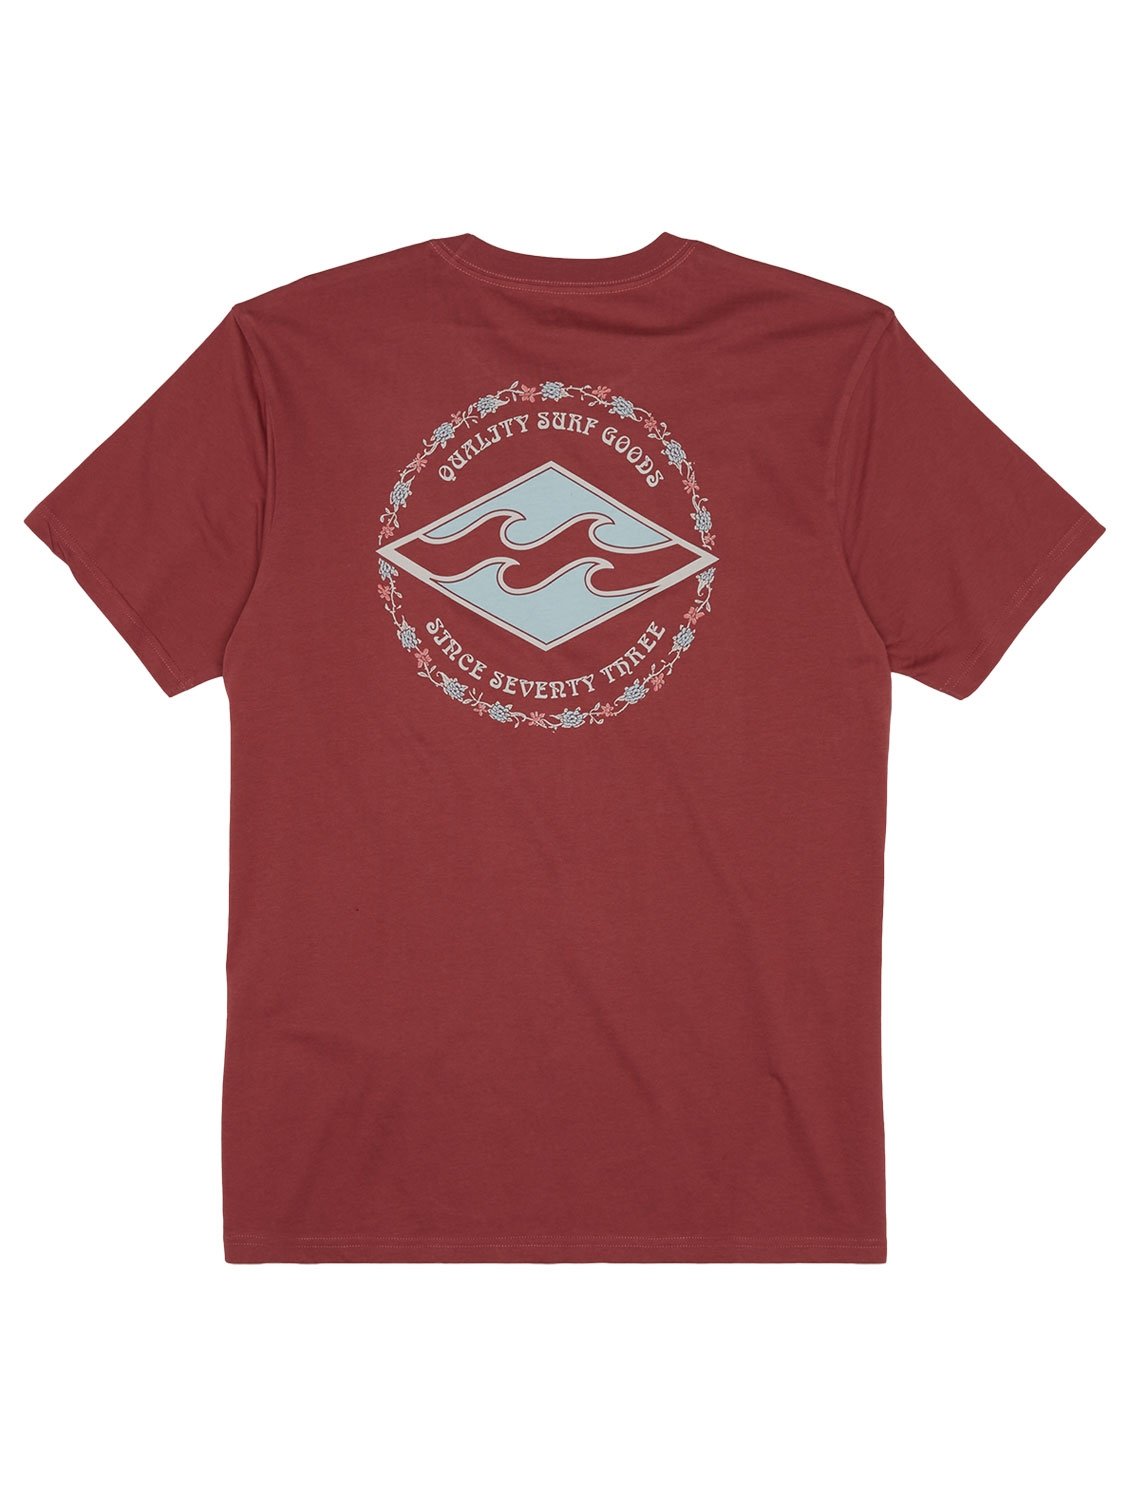 Billabong Men's Rotor Diamond T-Shirt